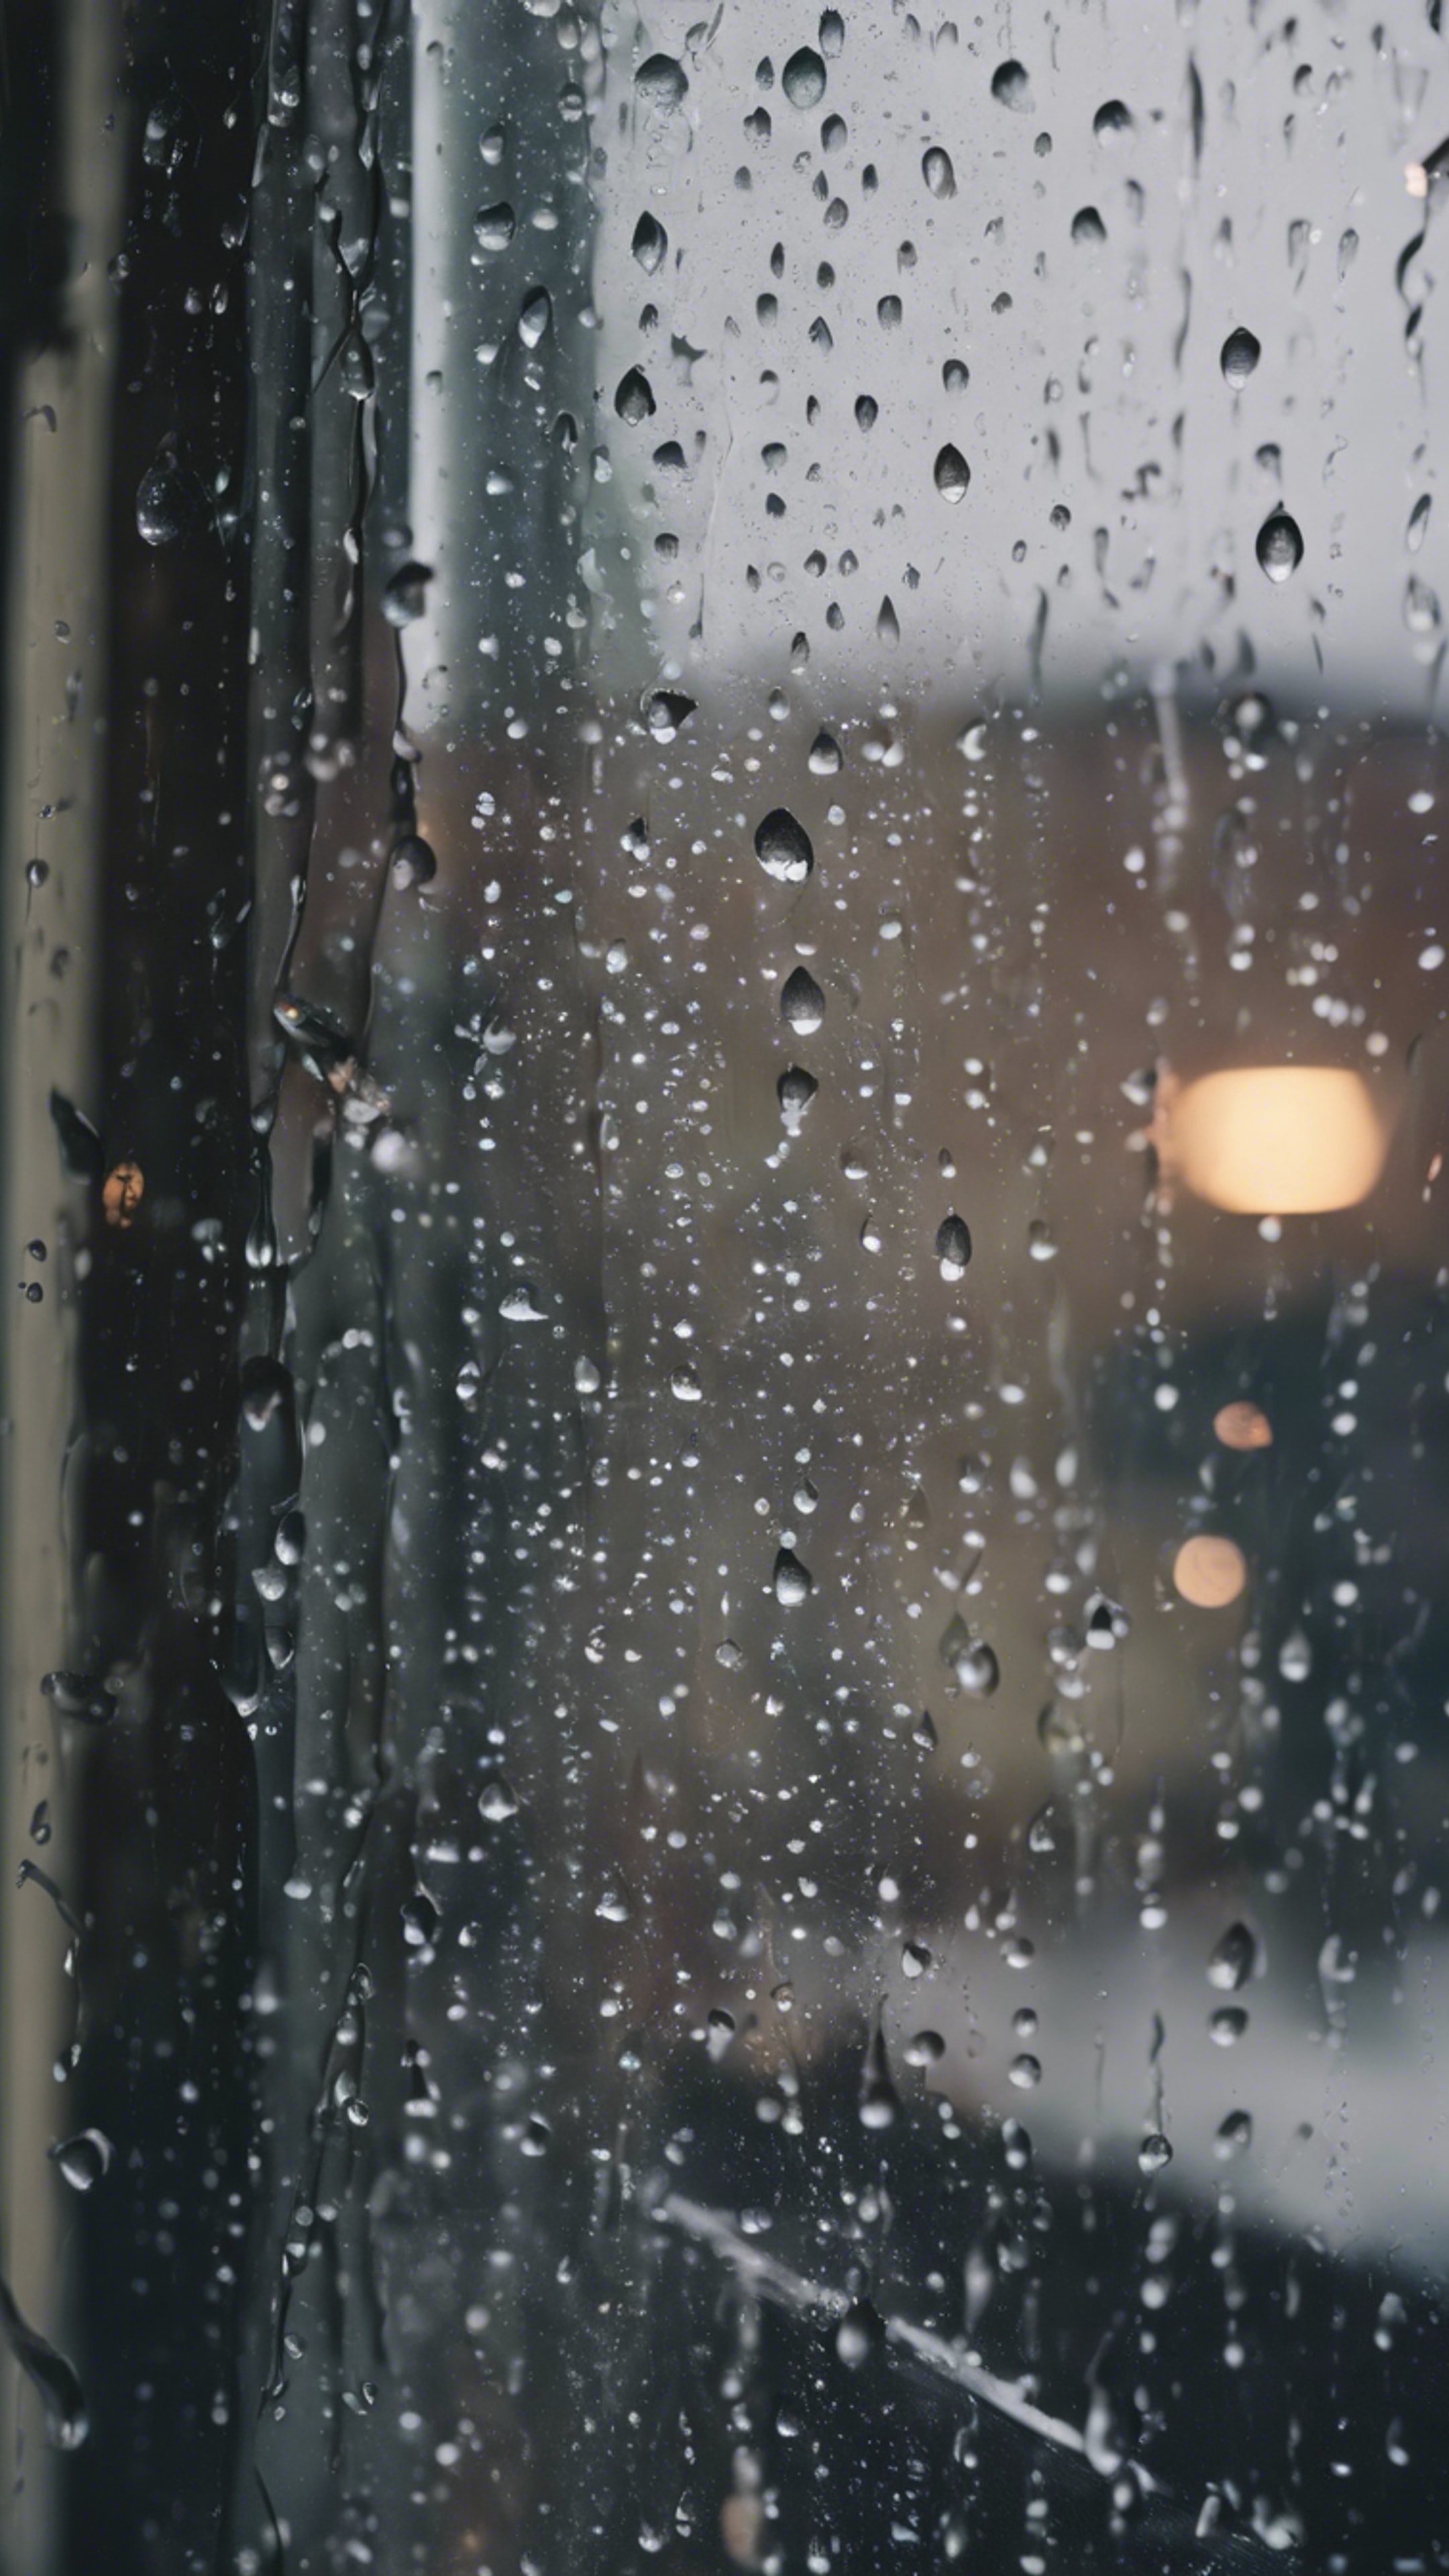 A heavy rainstorm viewed through a window, the droplets streaking down the glass טפט[548369da7c5b4ee9bdb0]